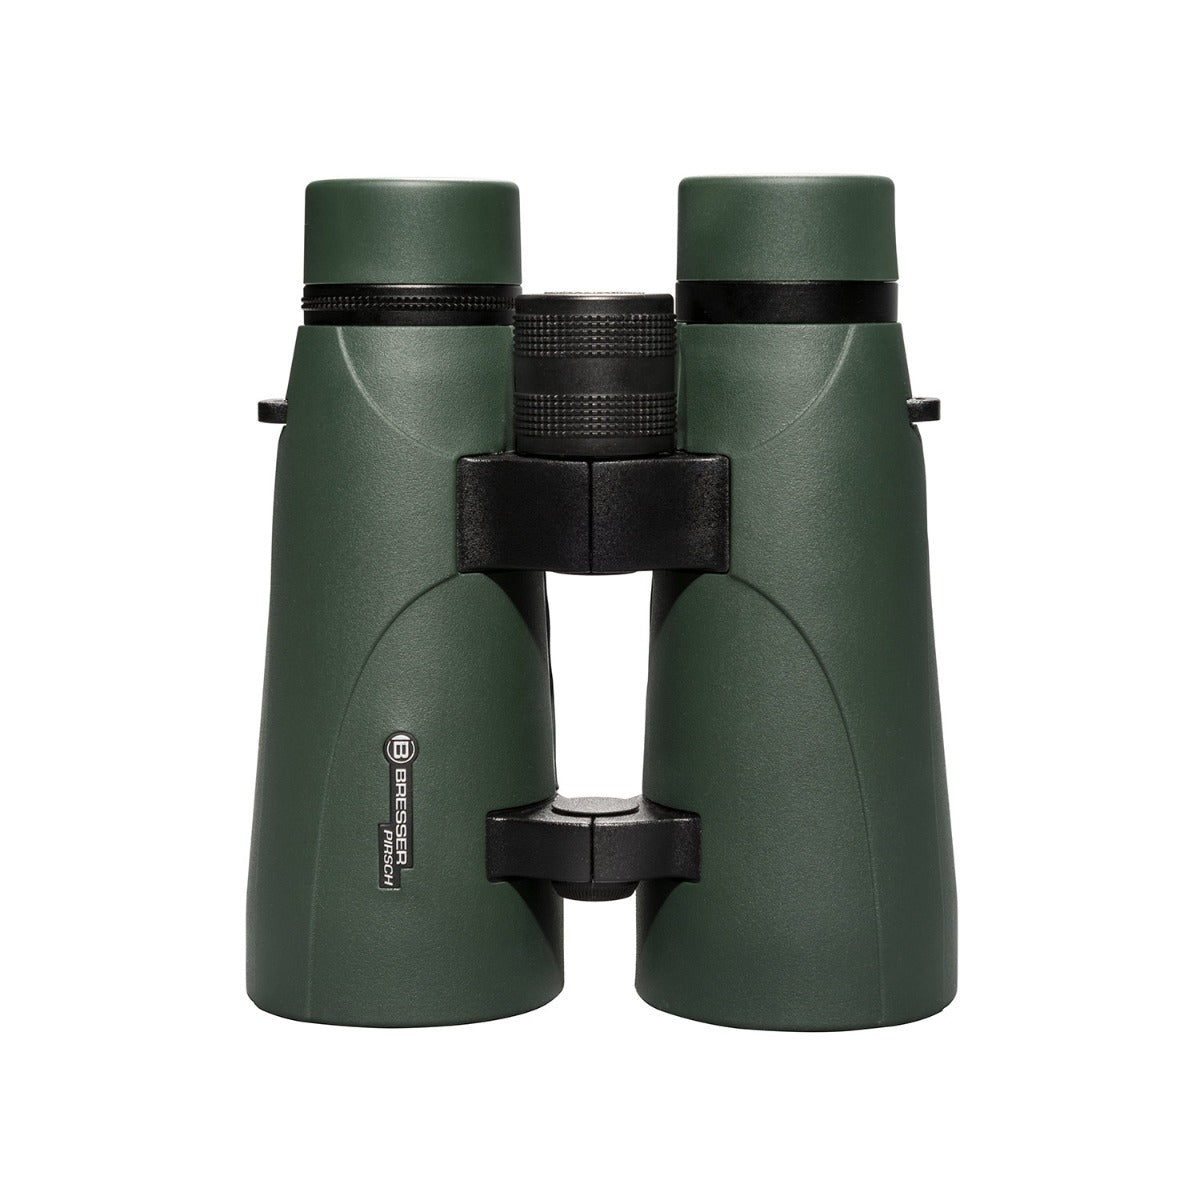 Bresser Pirsch 8x56 FMC Waterproof Binoculars